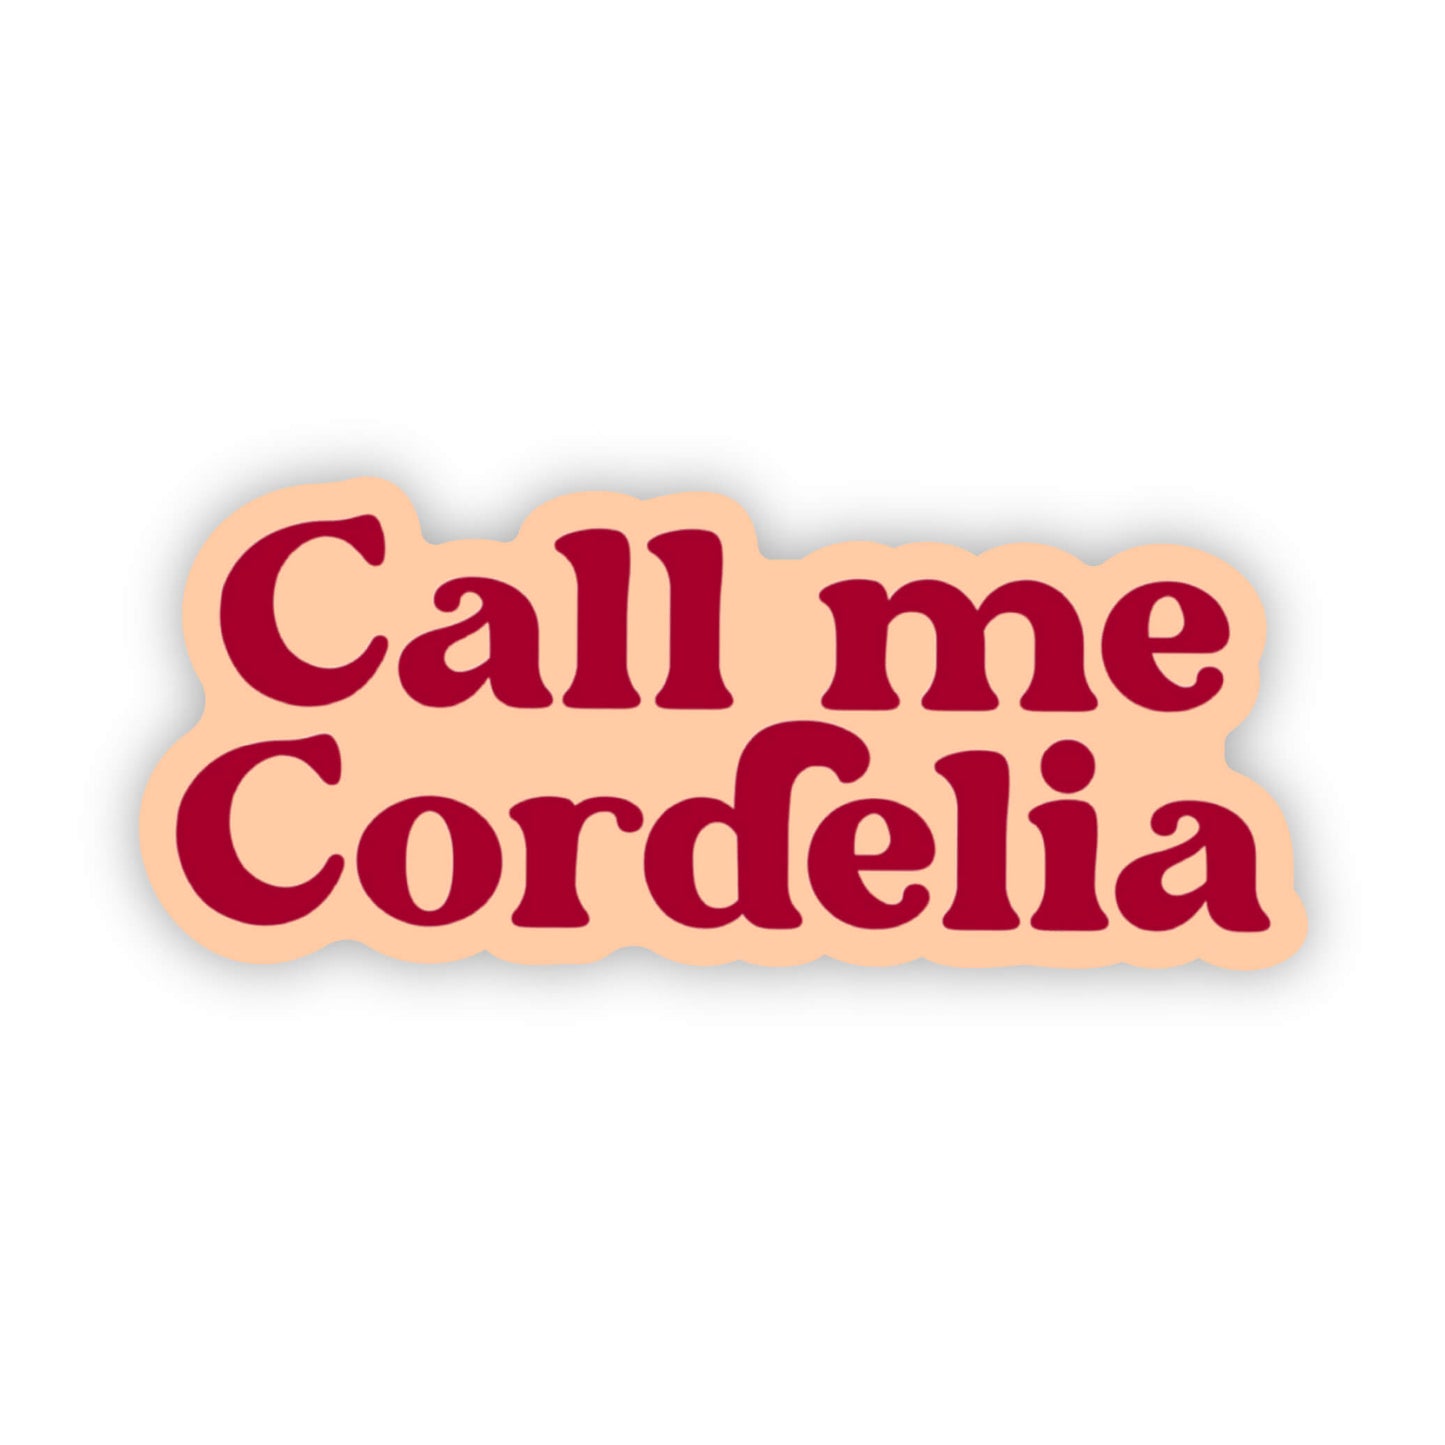 Call me Cordelia Sticker